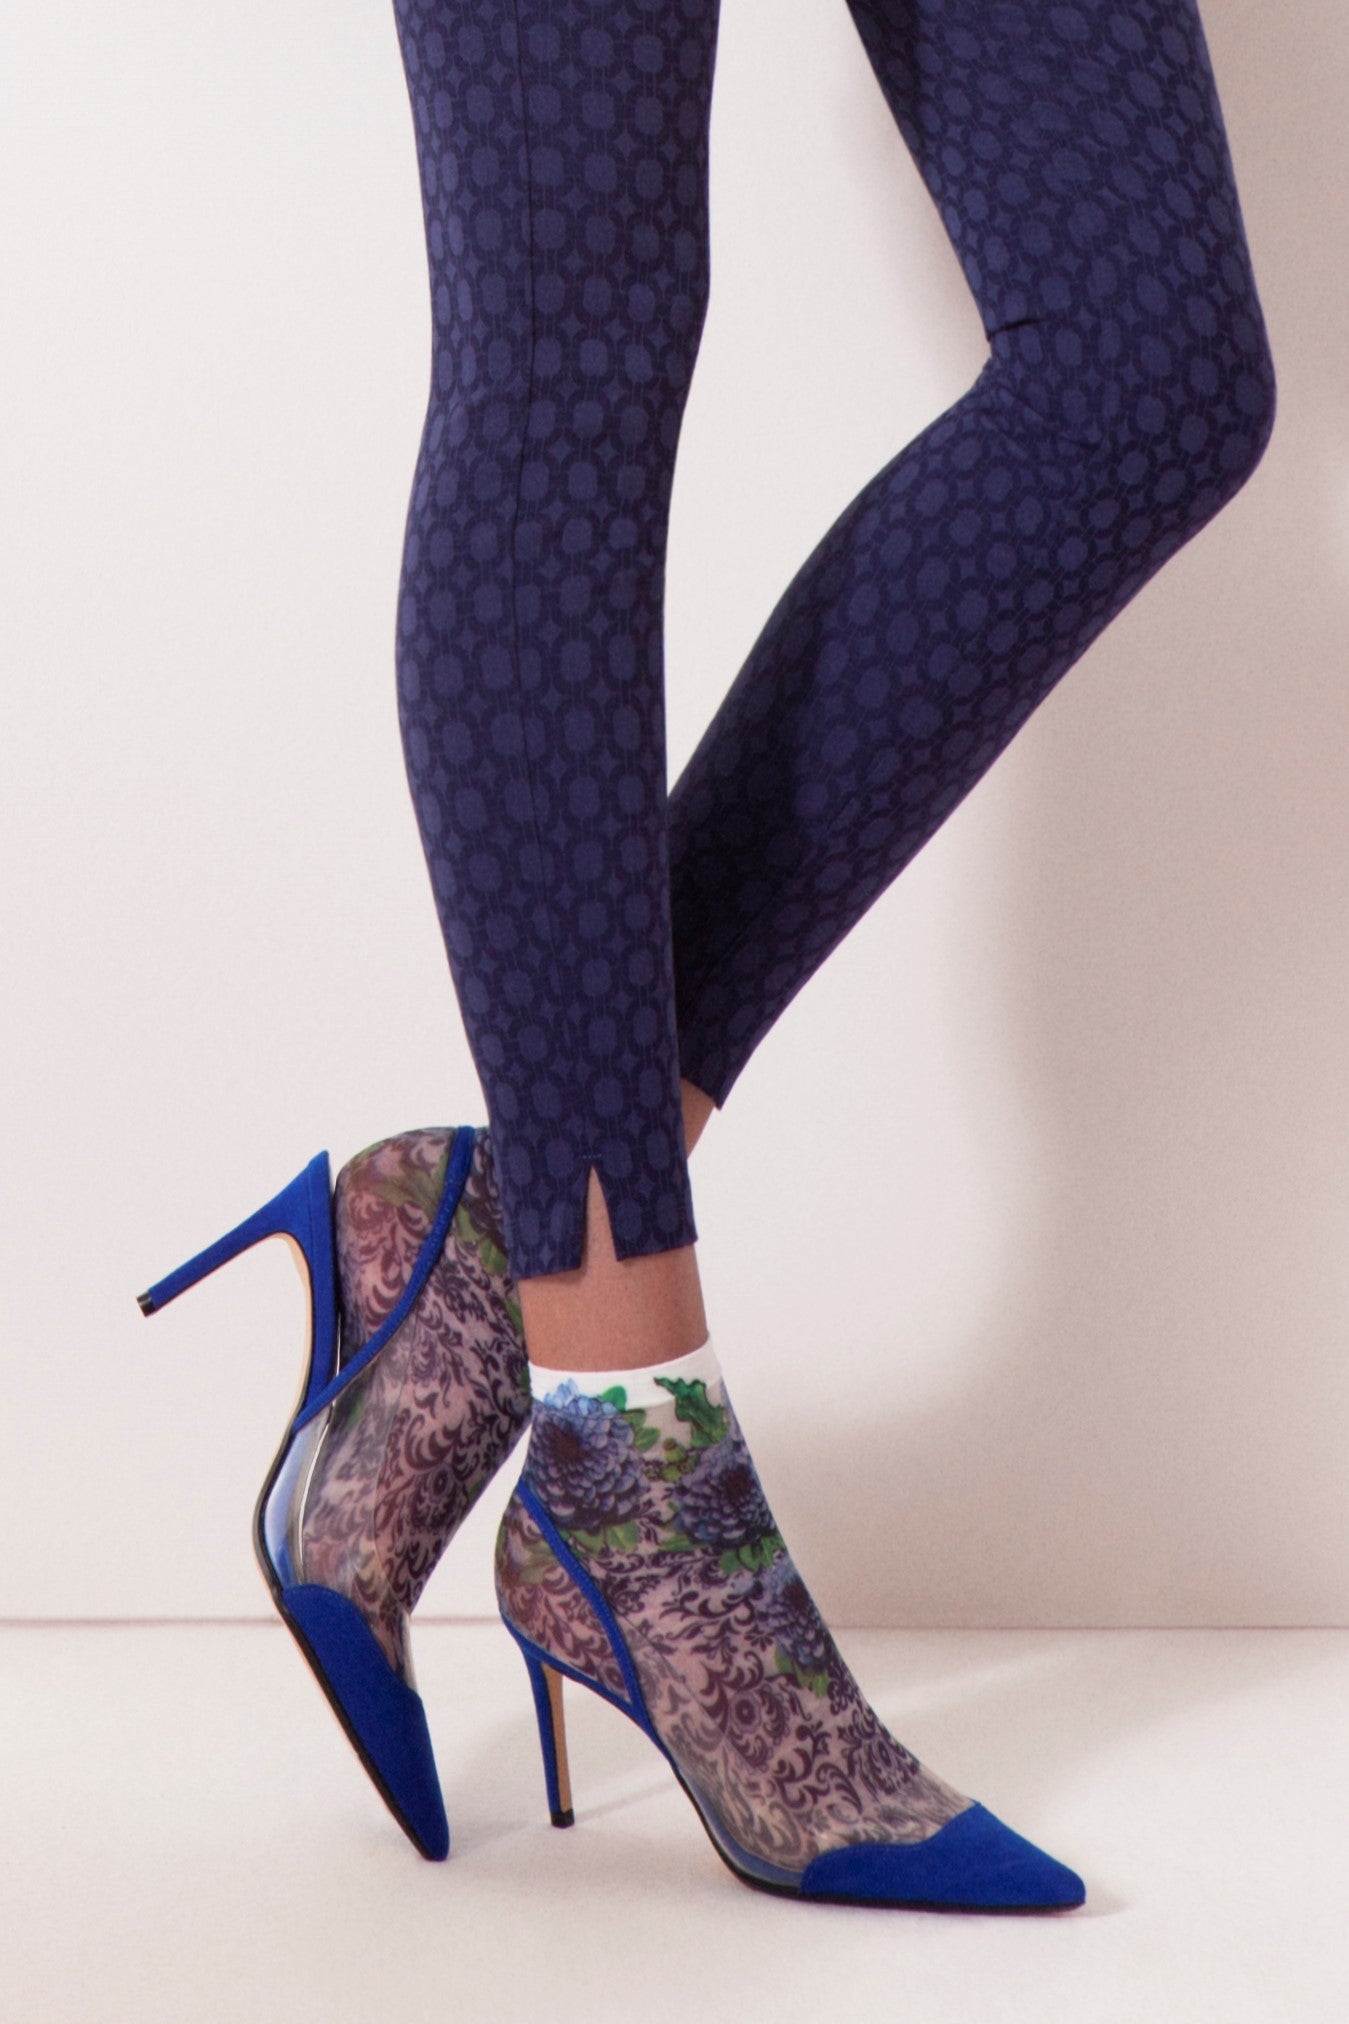 Omsa 3568 Fiori Blu Calzino - White floral print fashion ankle socks in blue and green.